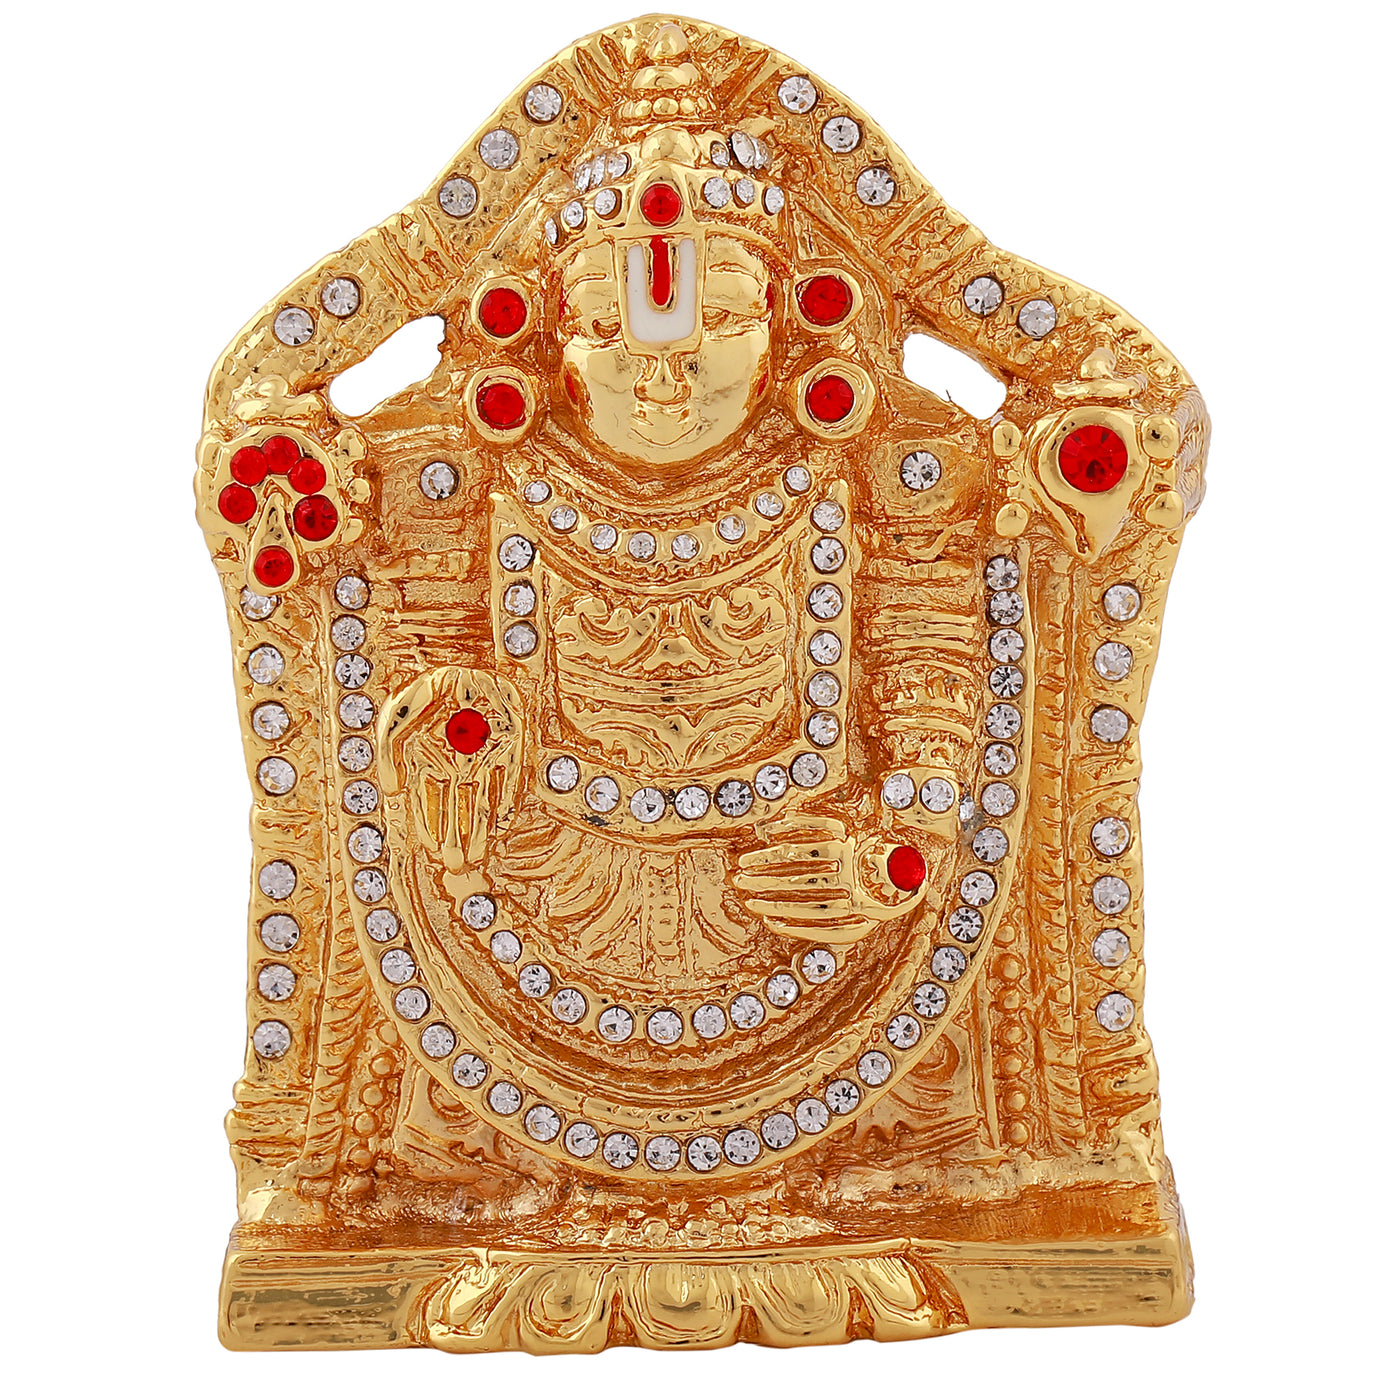 Estele Gold Plated Lord Venkateshwara (Tirupathi Balaji) Idol (05BG)